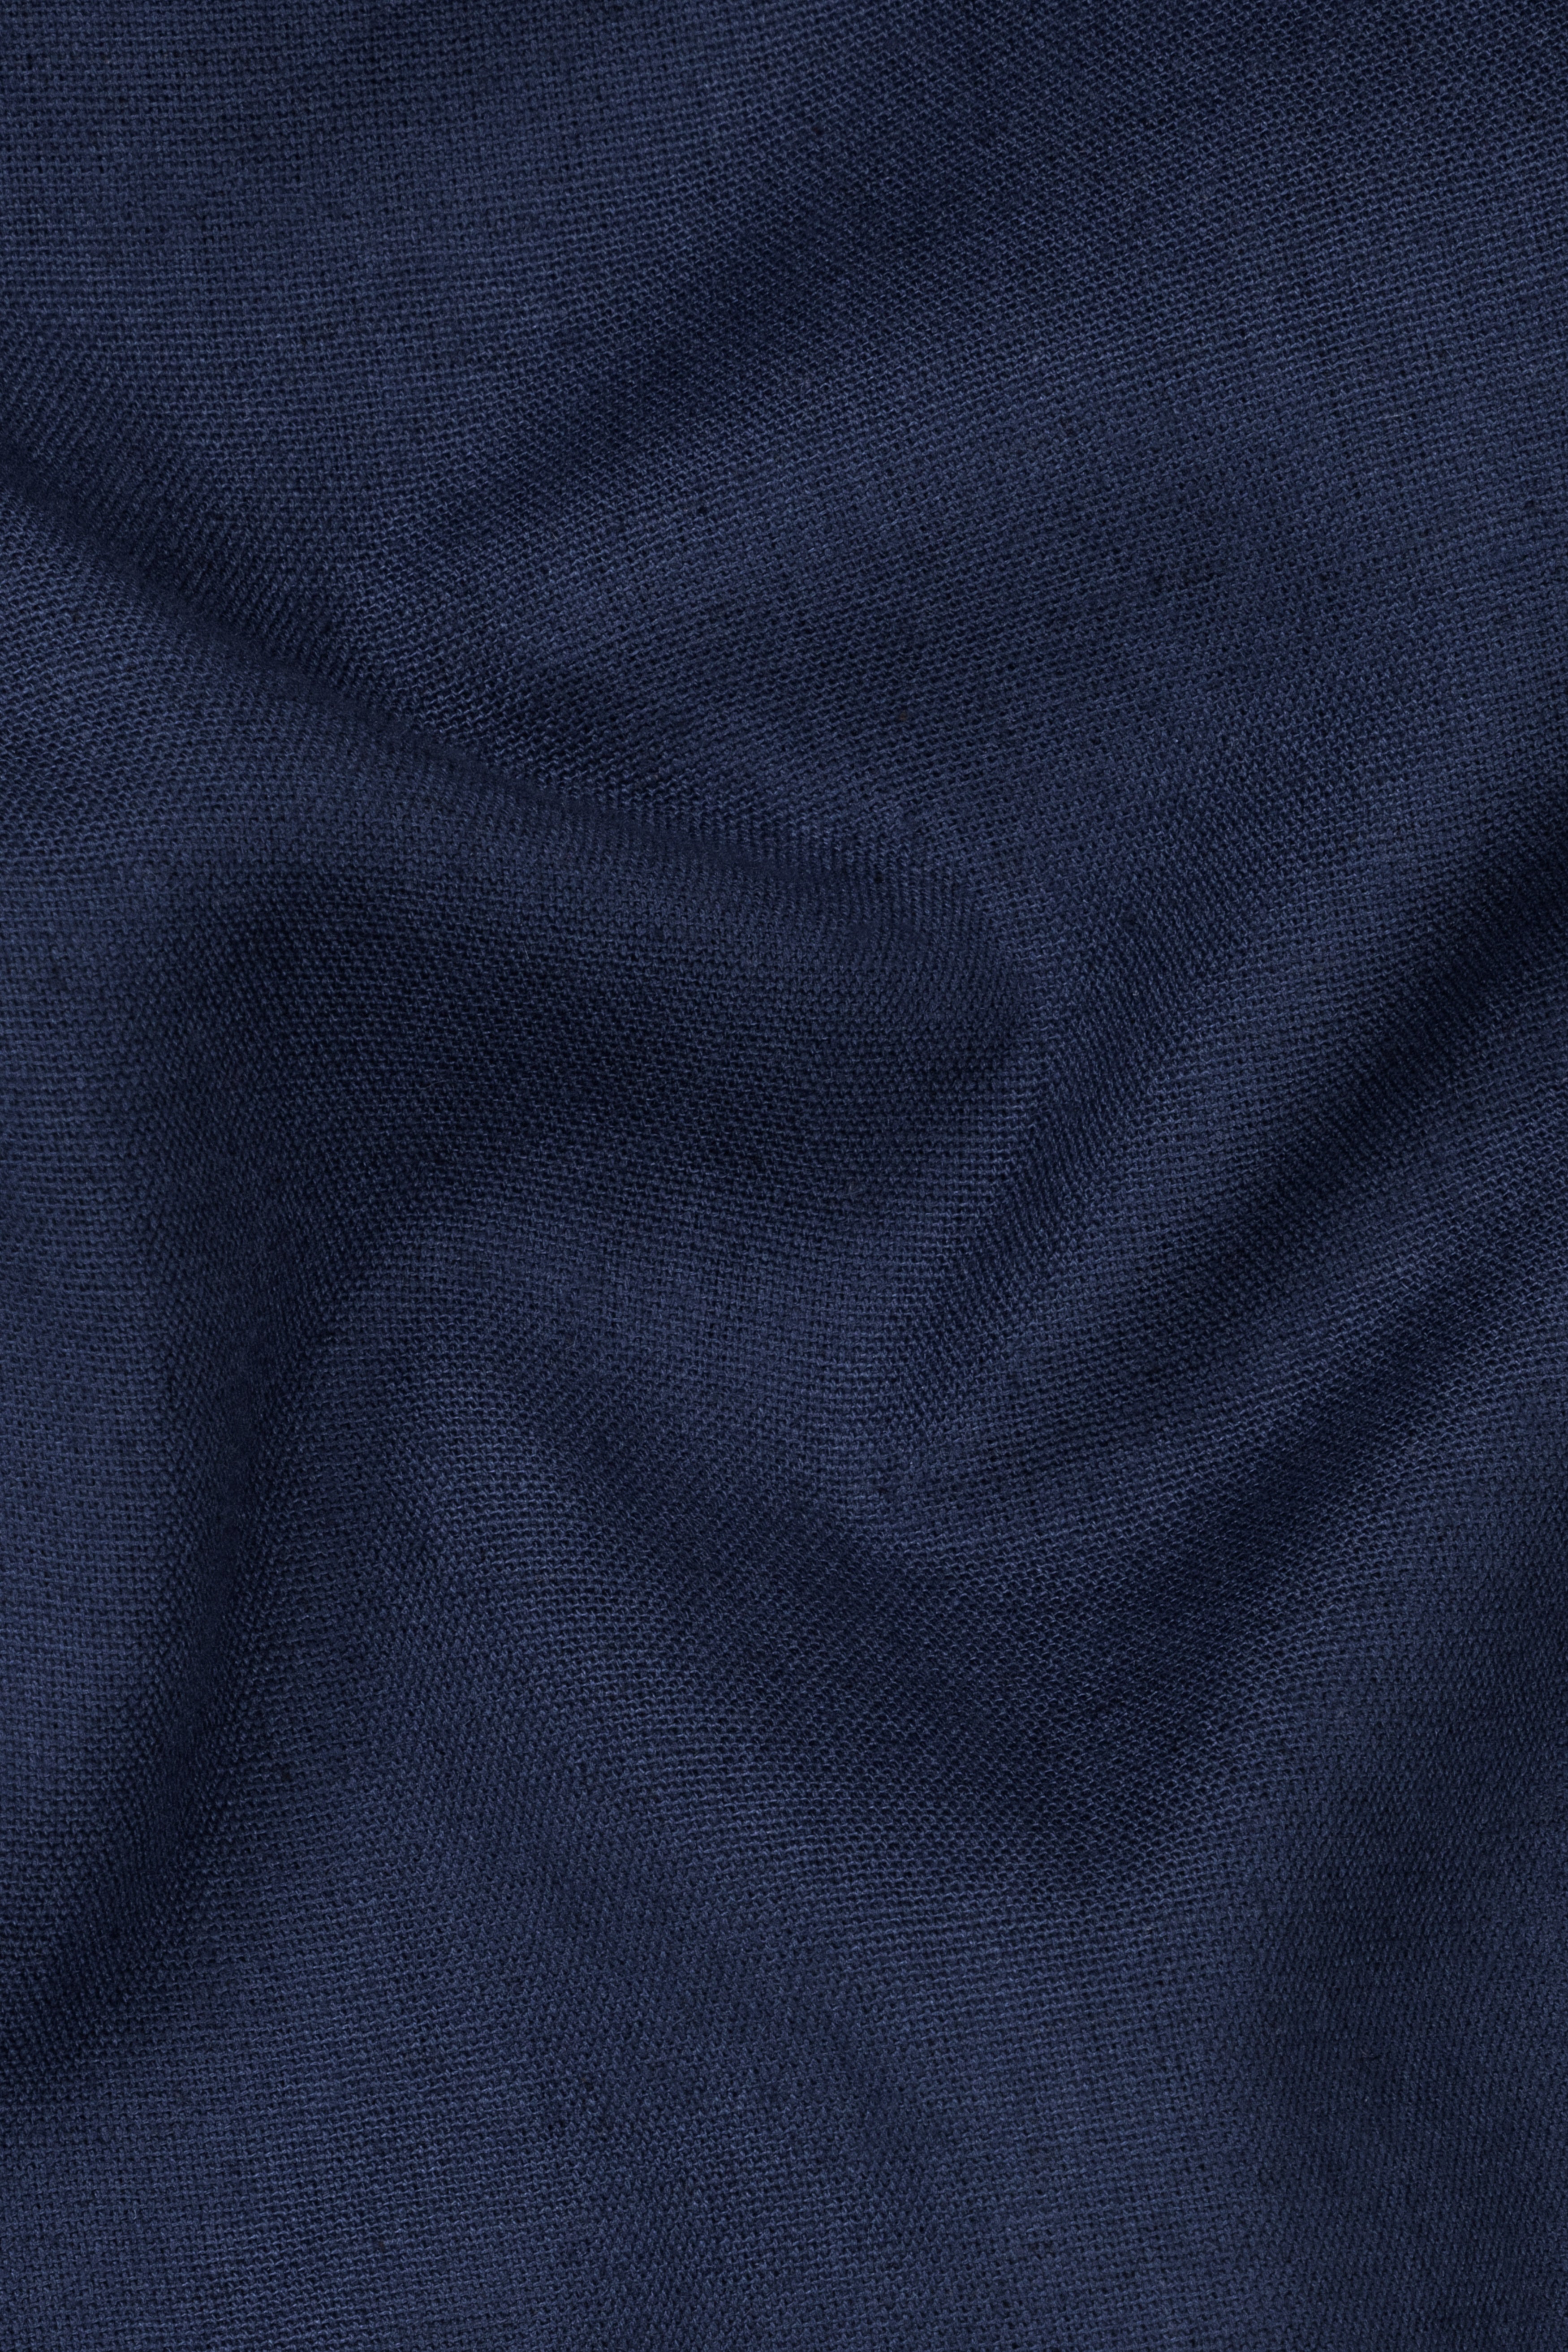 Tealish Blue Luxurious Linen Lounge Pant